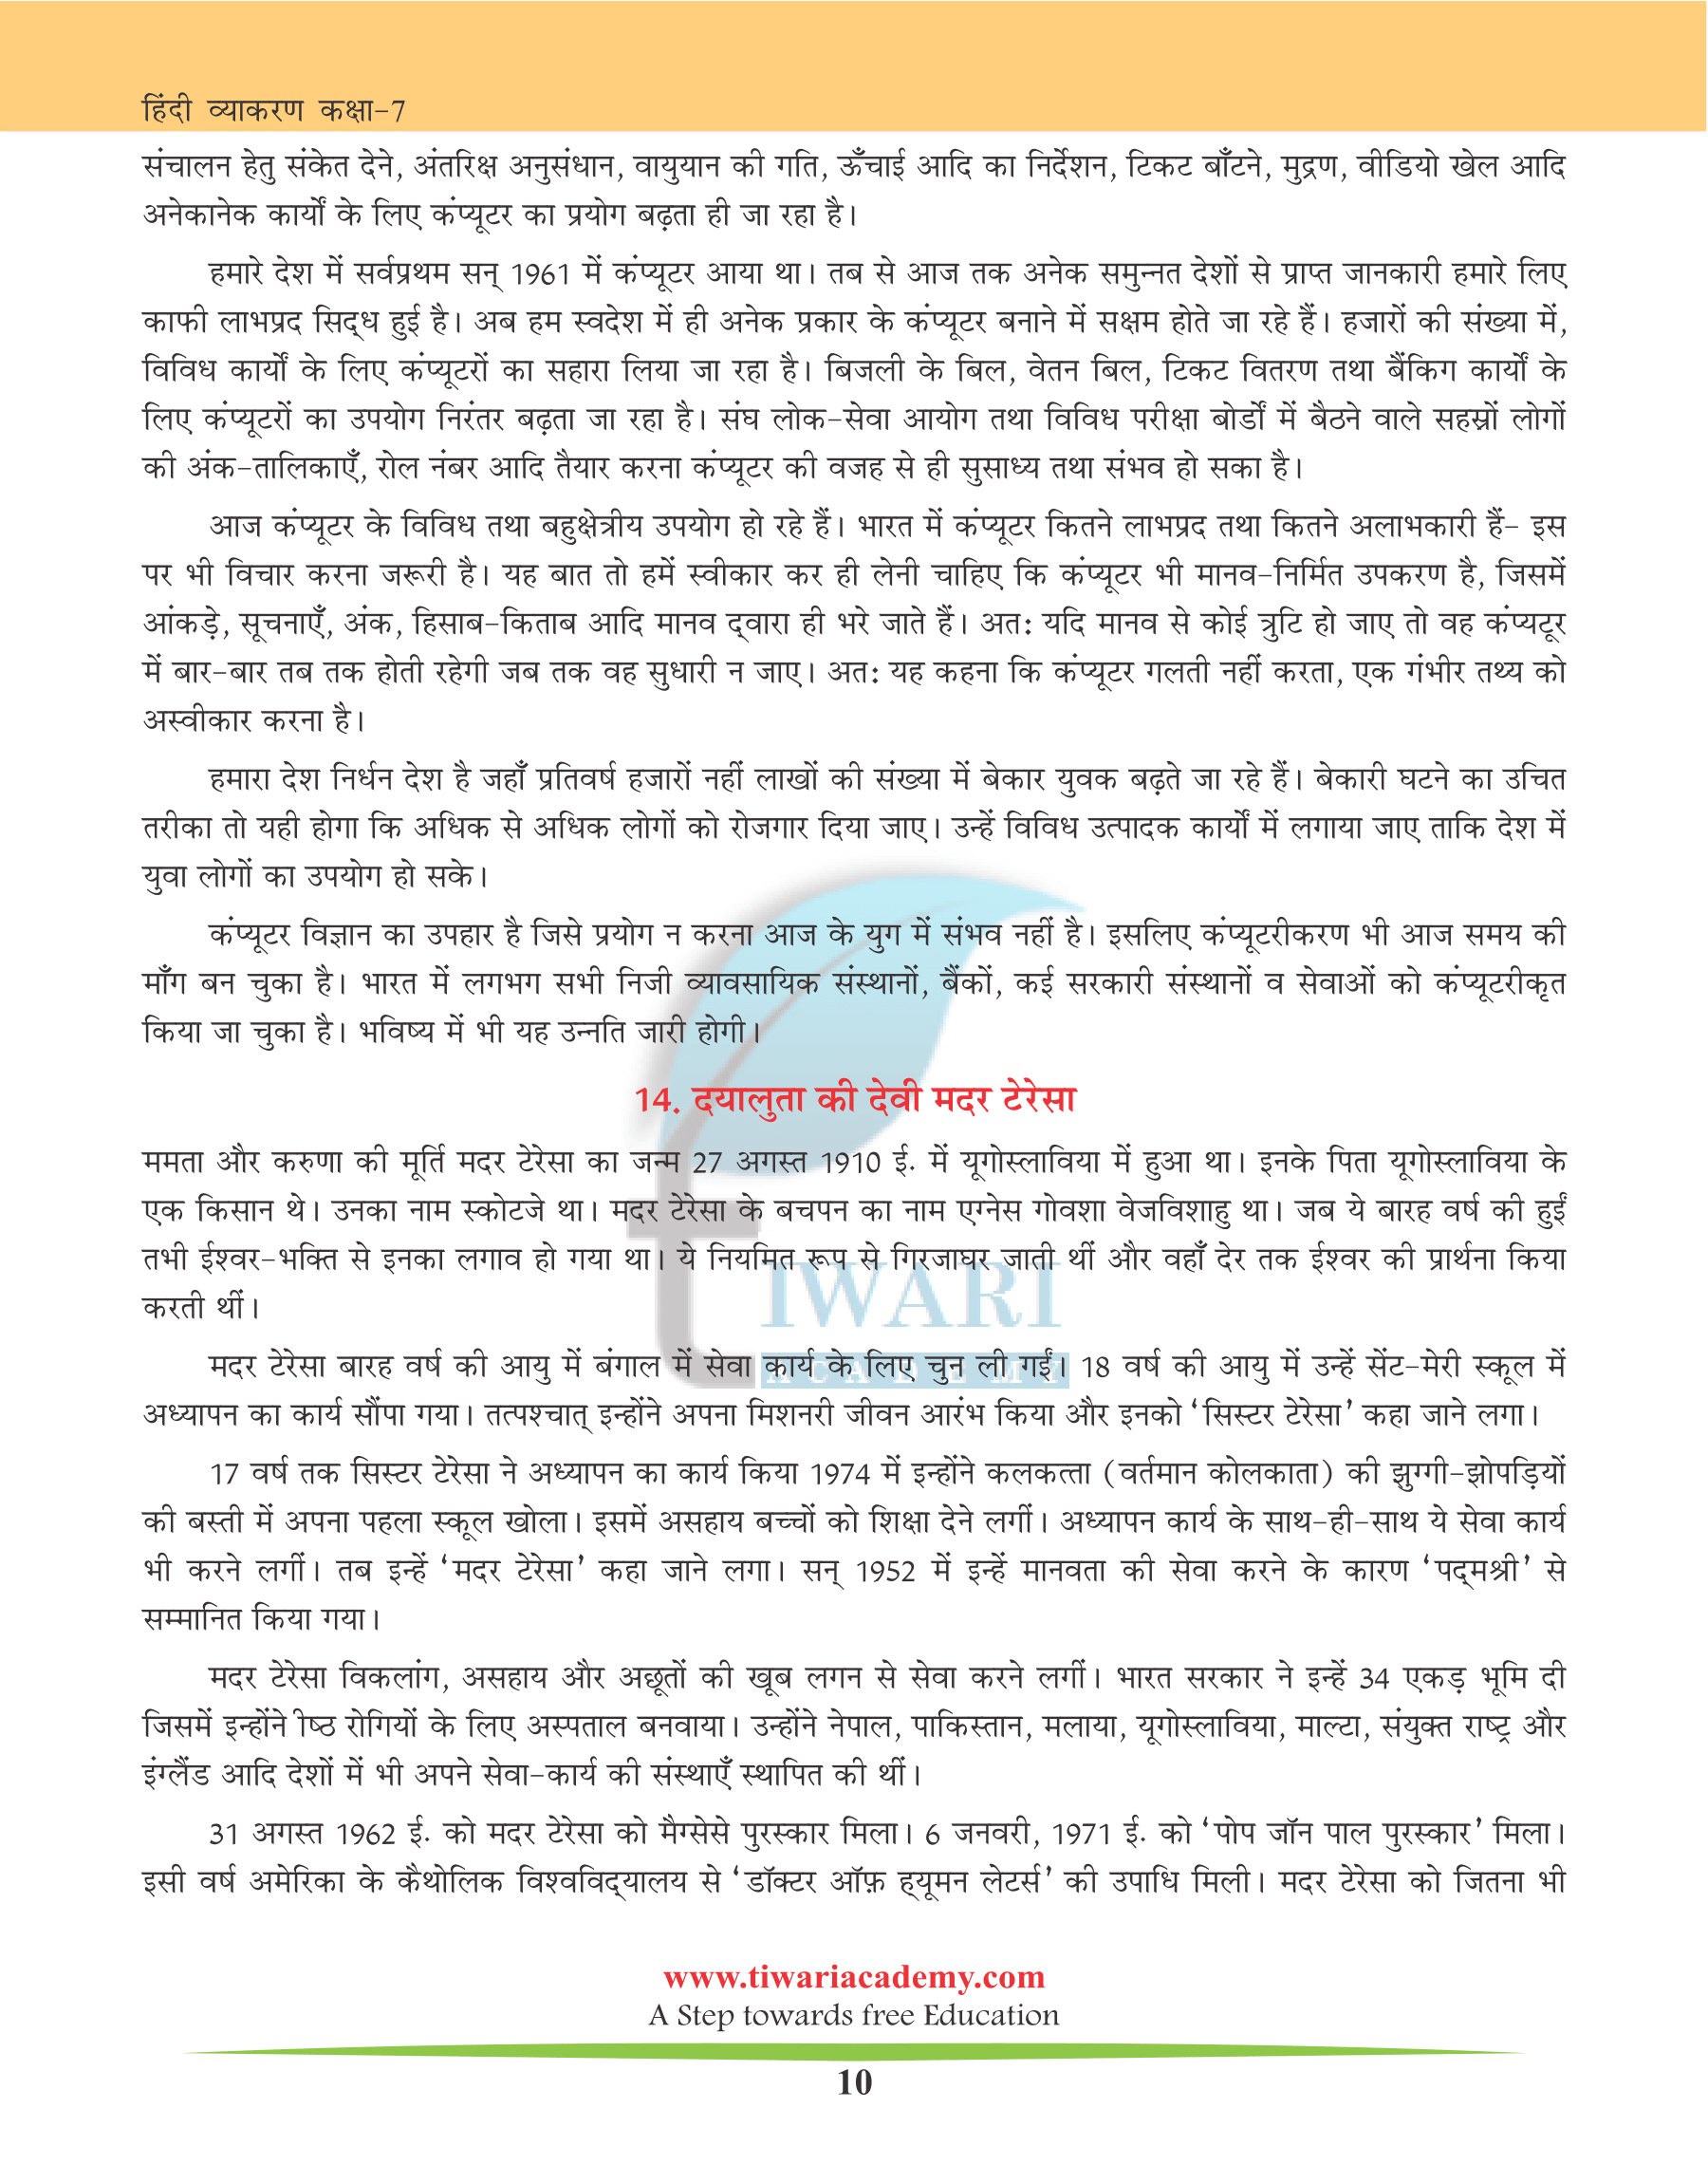 general essay topics in hindi